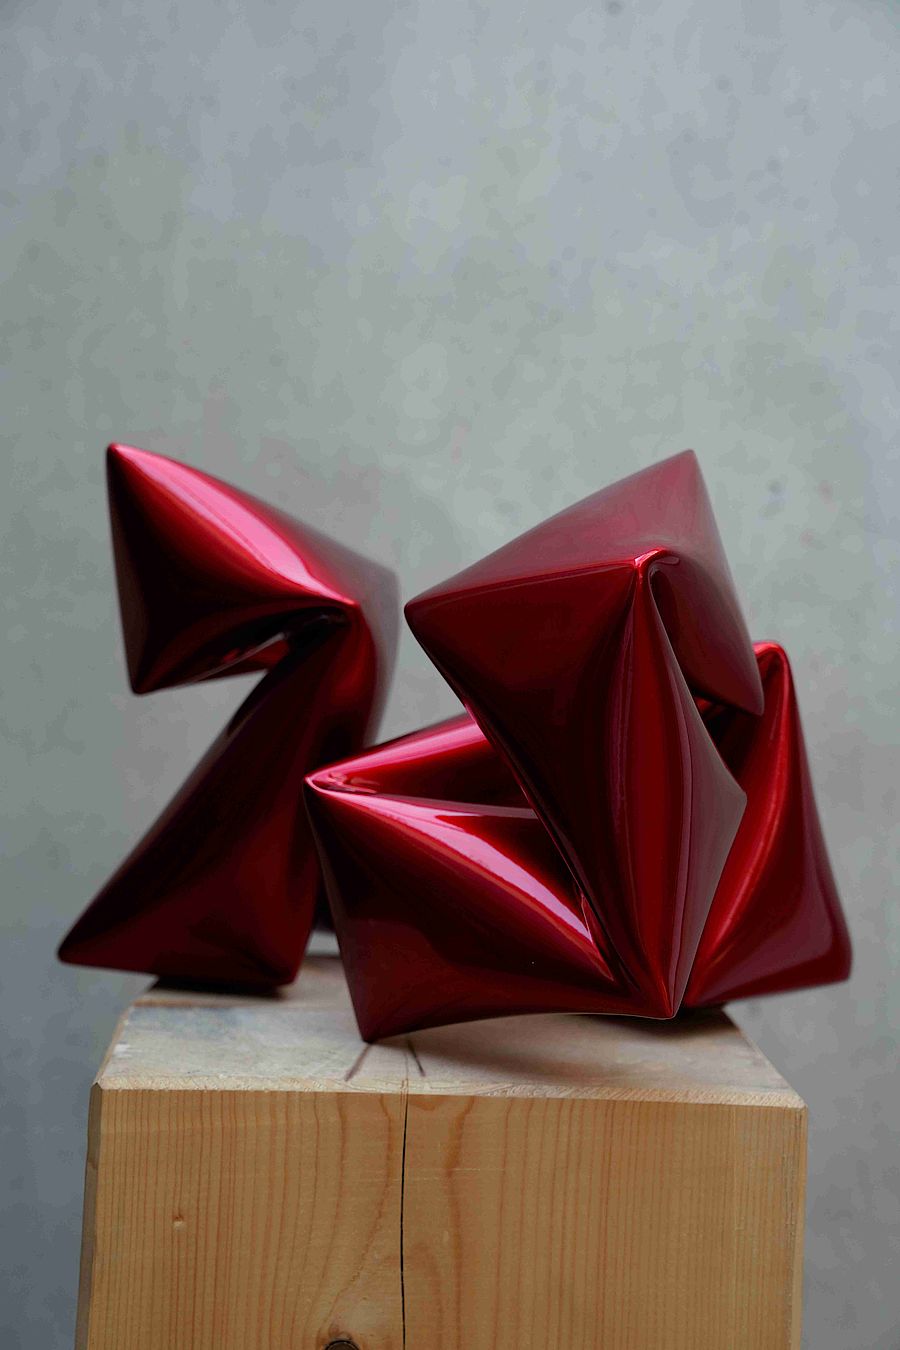 Korff Stiftung - Willi Siber - Skulpturen - Stahlskulptur rot